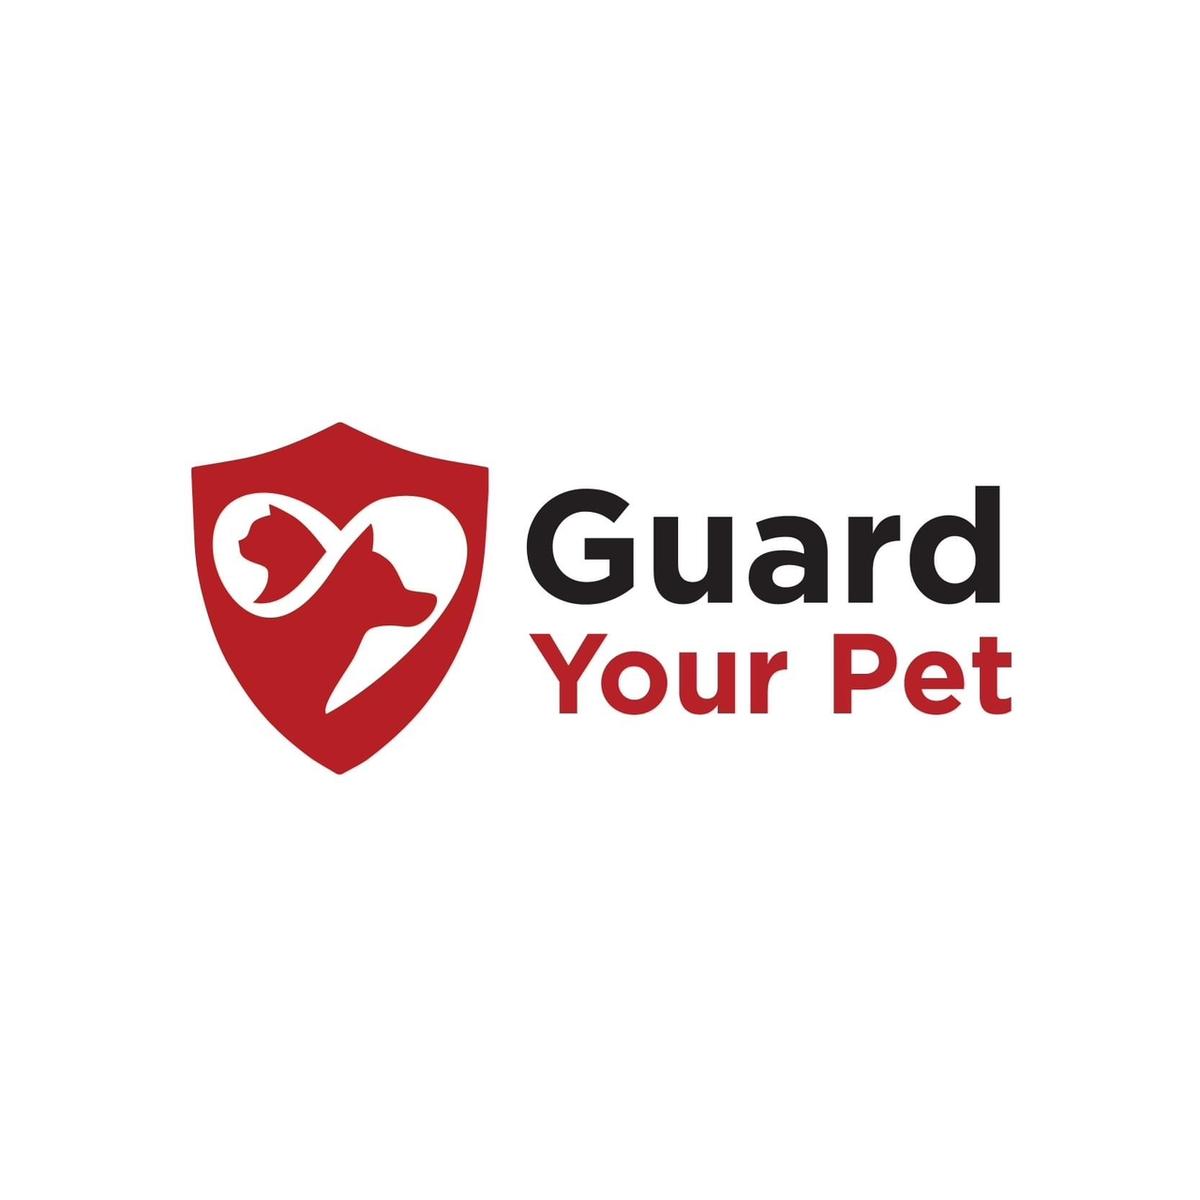 Guard Your Pet